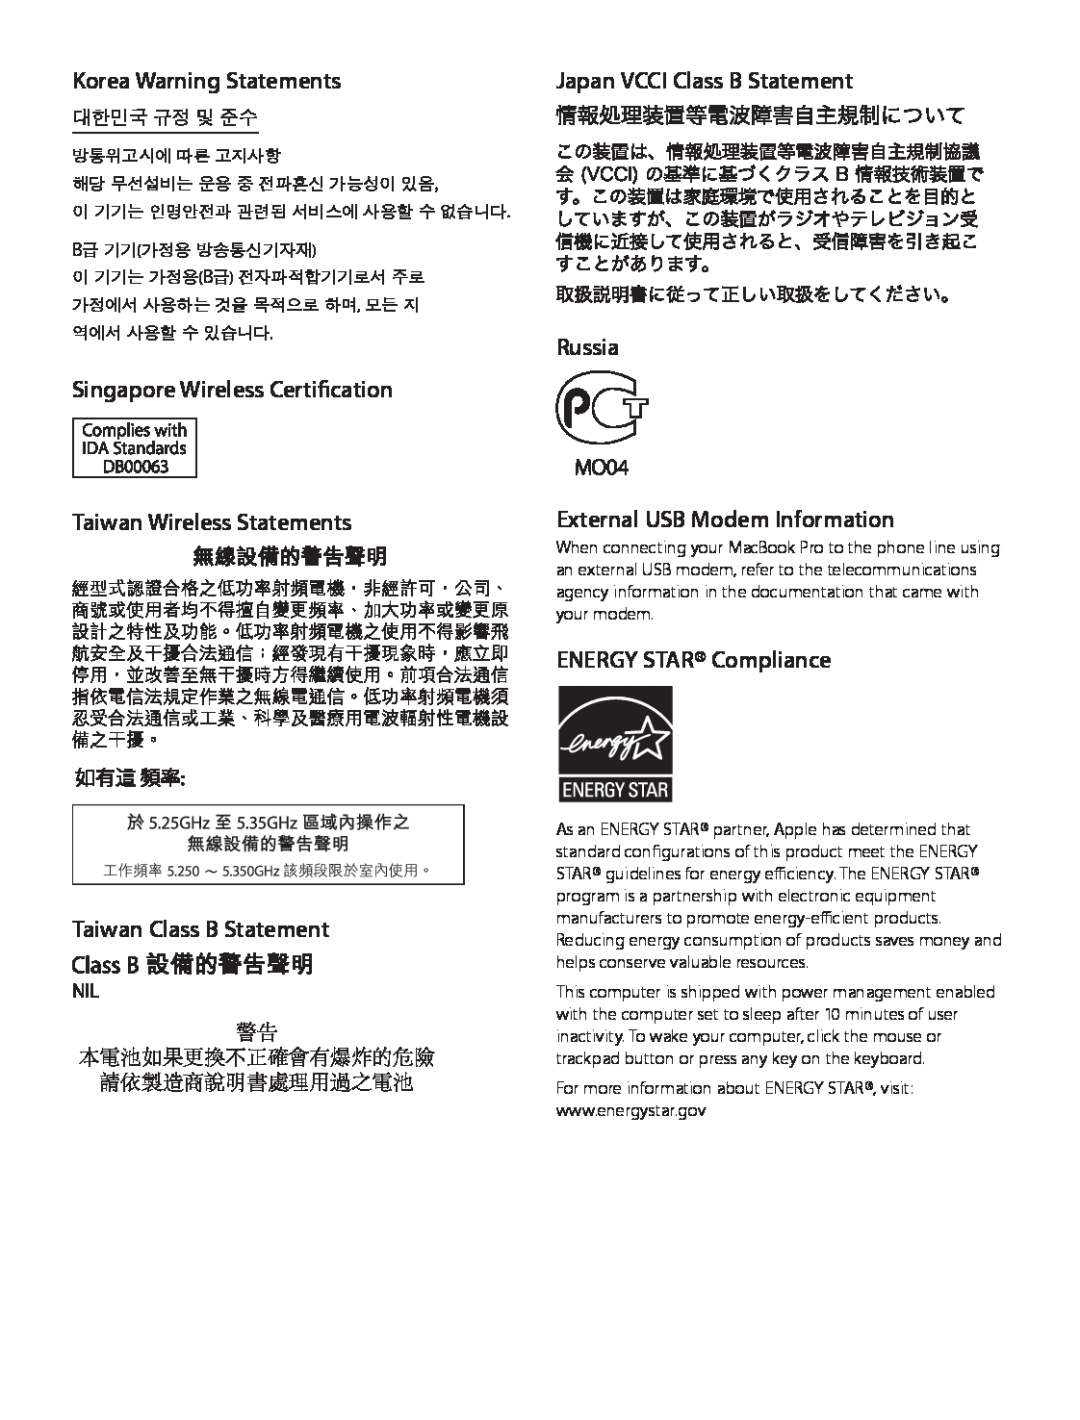 Apple MD104LL/A Taiwan Class B Statement, ENERGY STAR Compliance, an external USB modem, refer to the telecommunications 